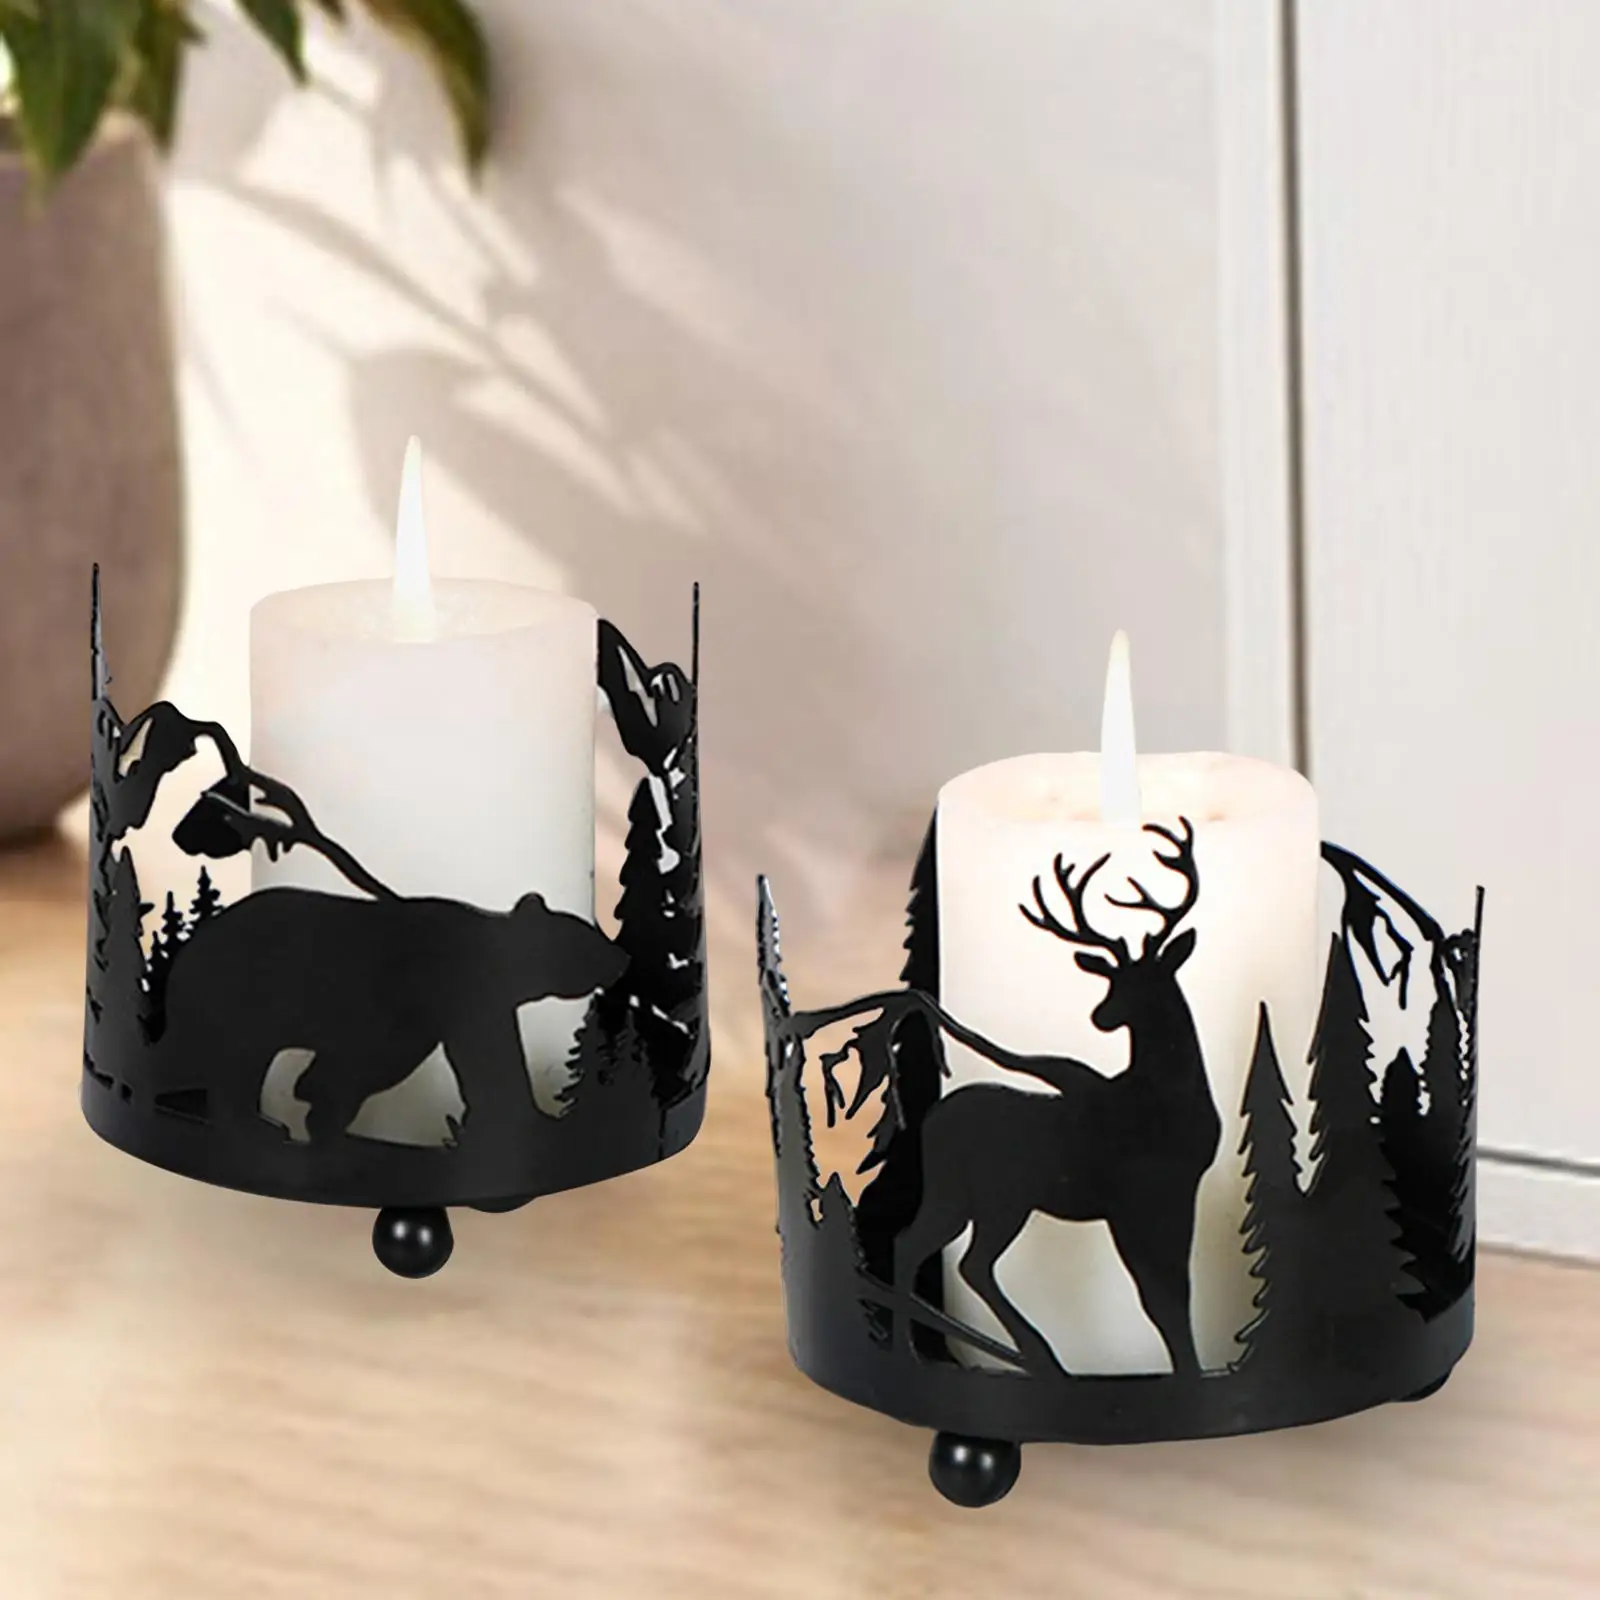 Votive Candle Holder, Candlestick Decorative Romantic Nordic Candleholder Candelabra for Table Party Desktop Decor Gift